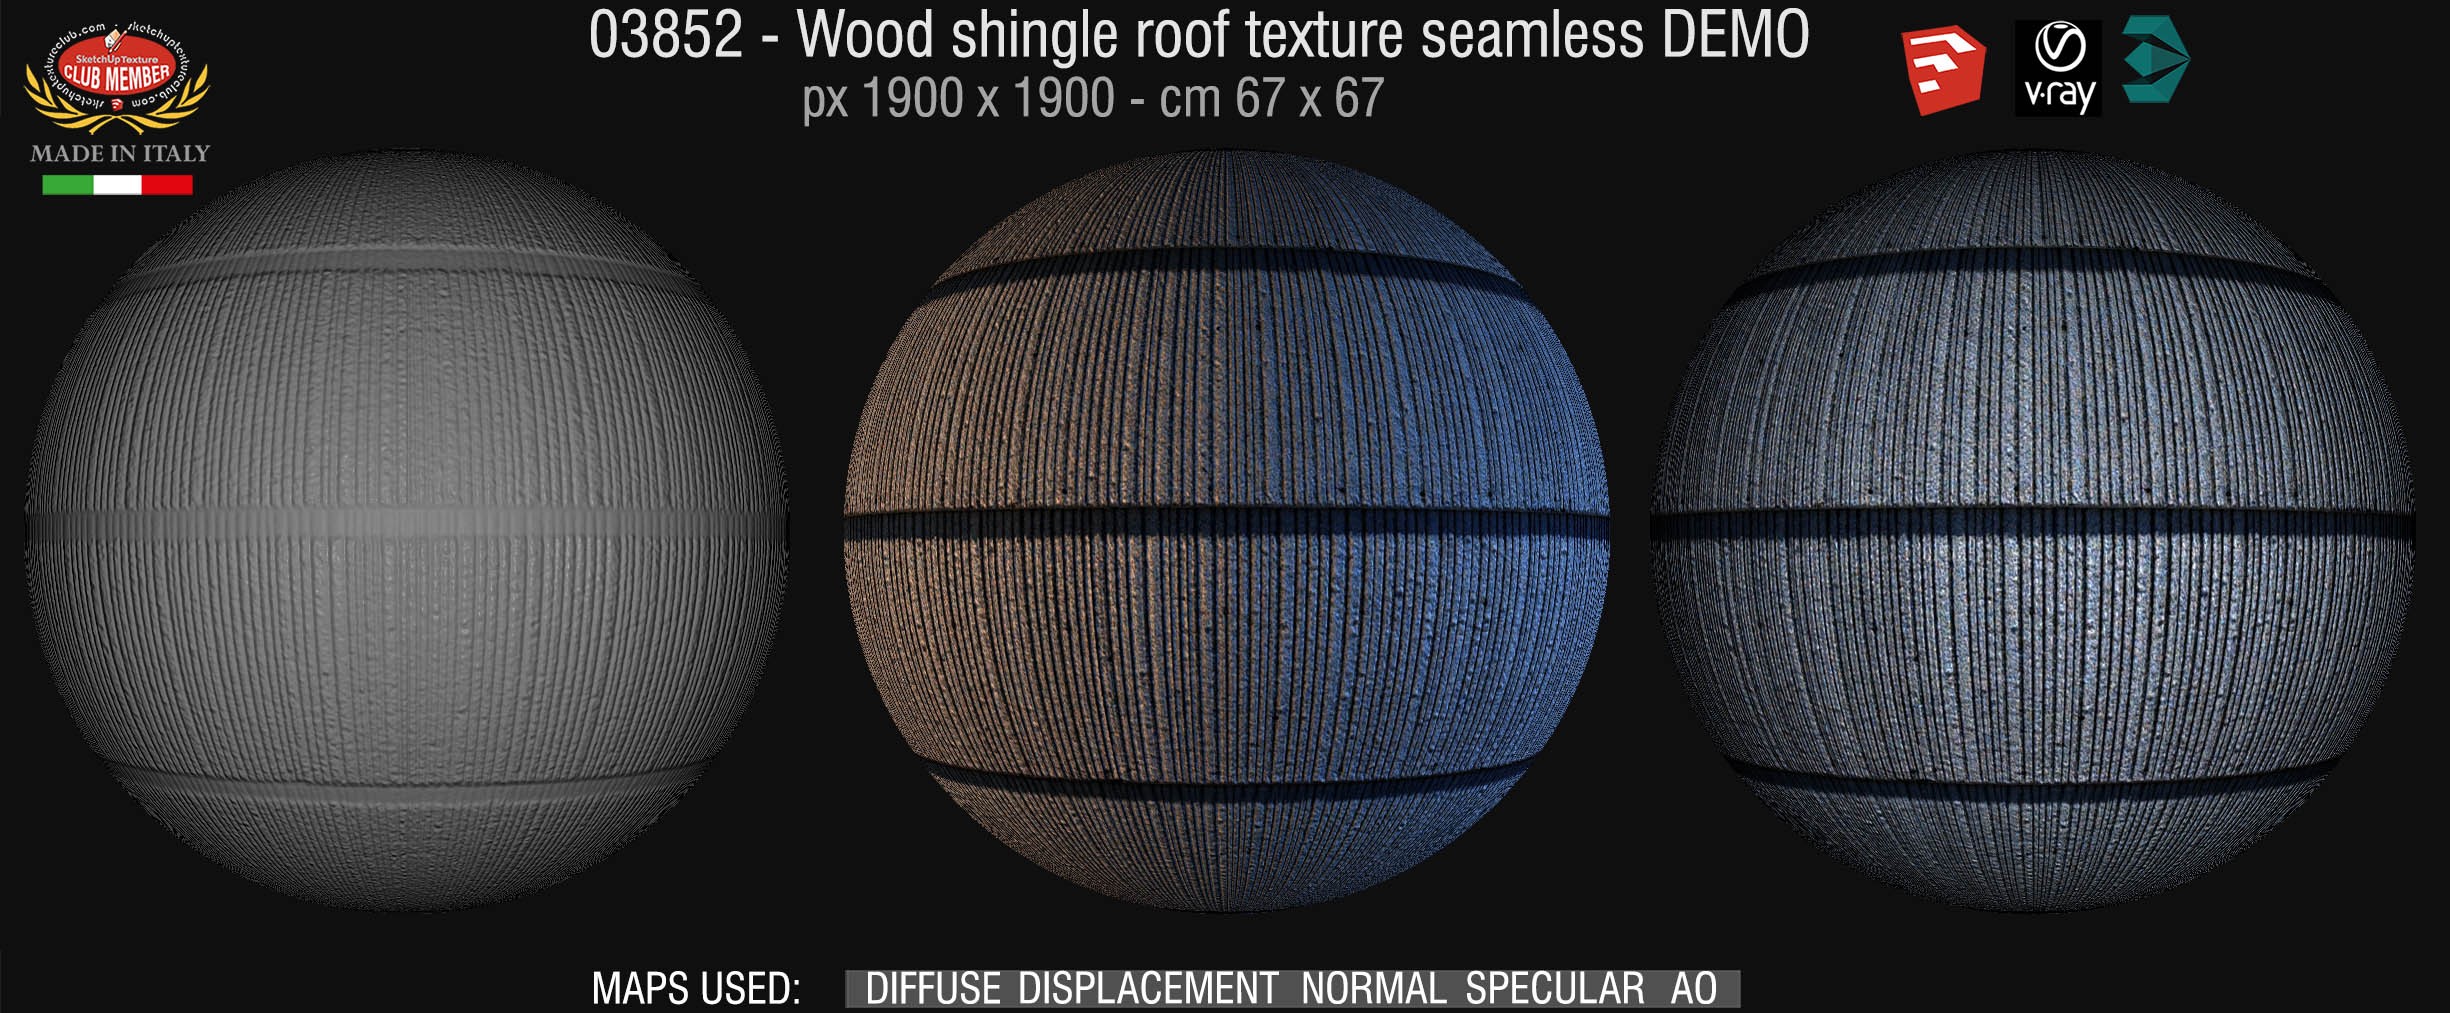 03852 Wood shingle roof texture seamless + maps DEMO